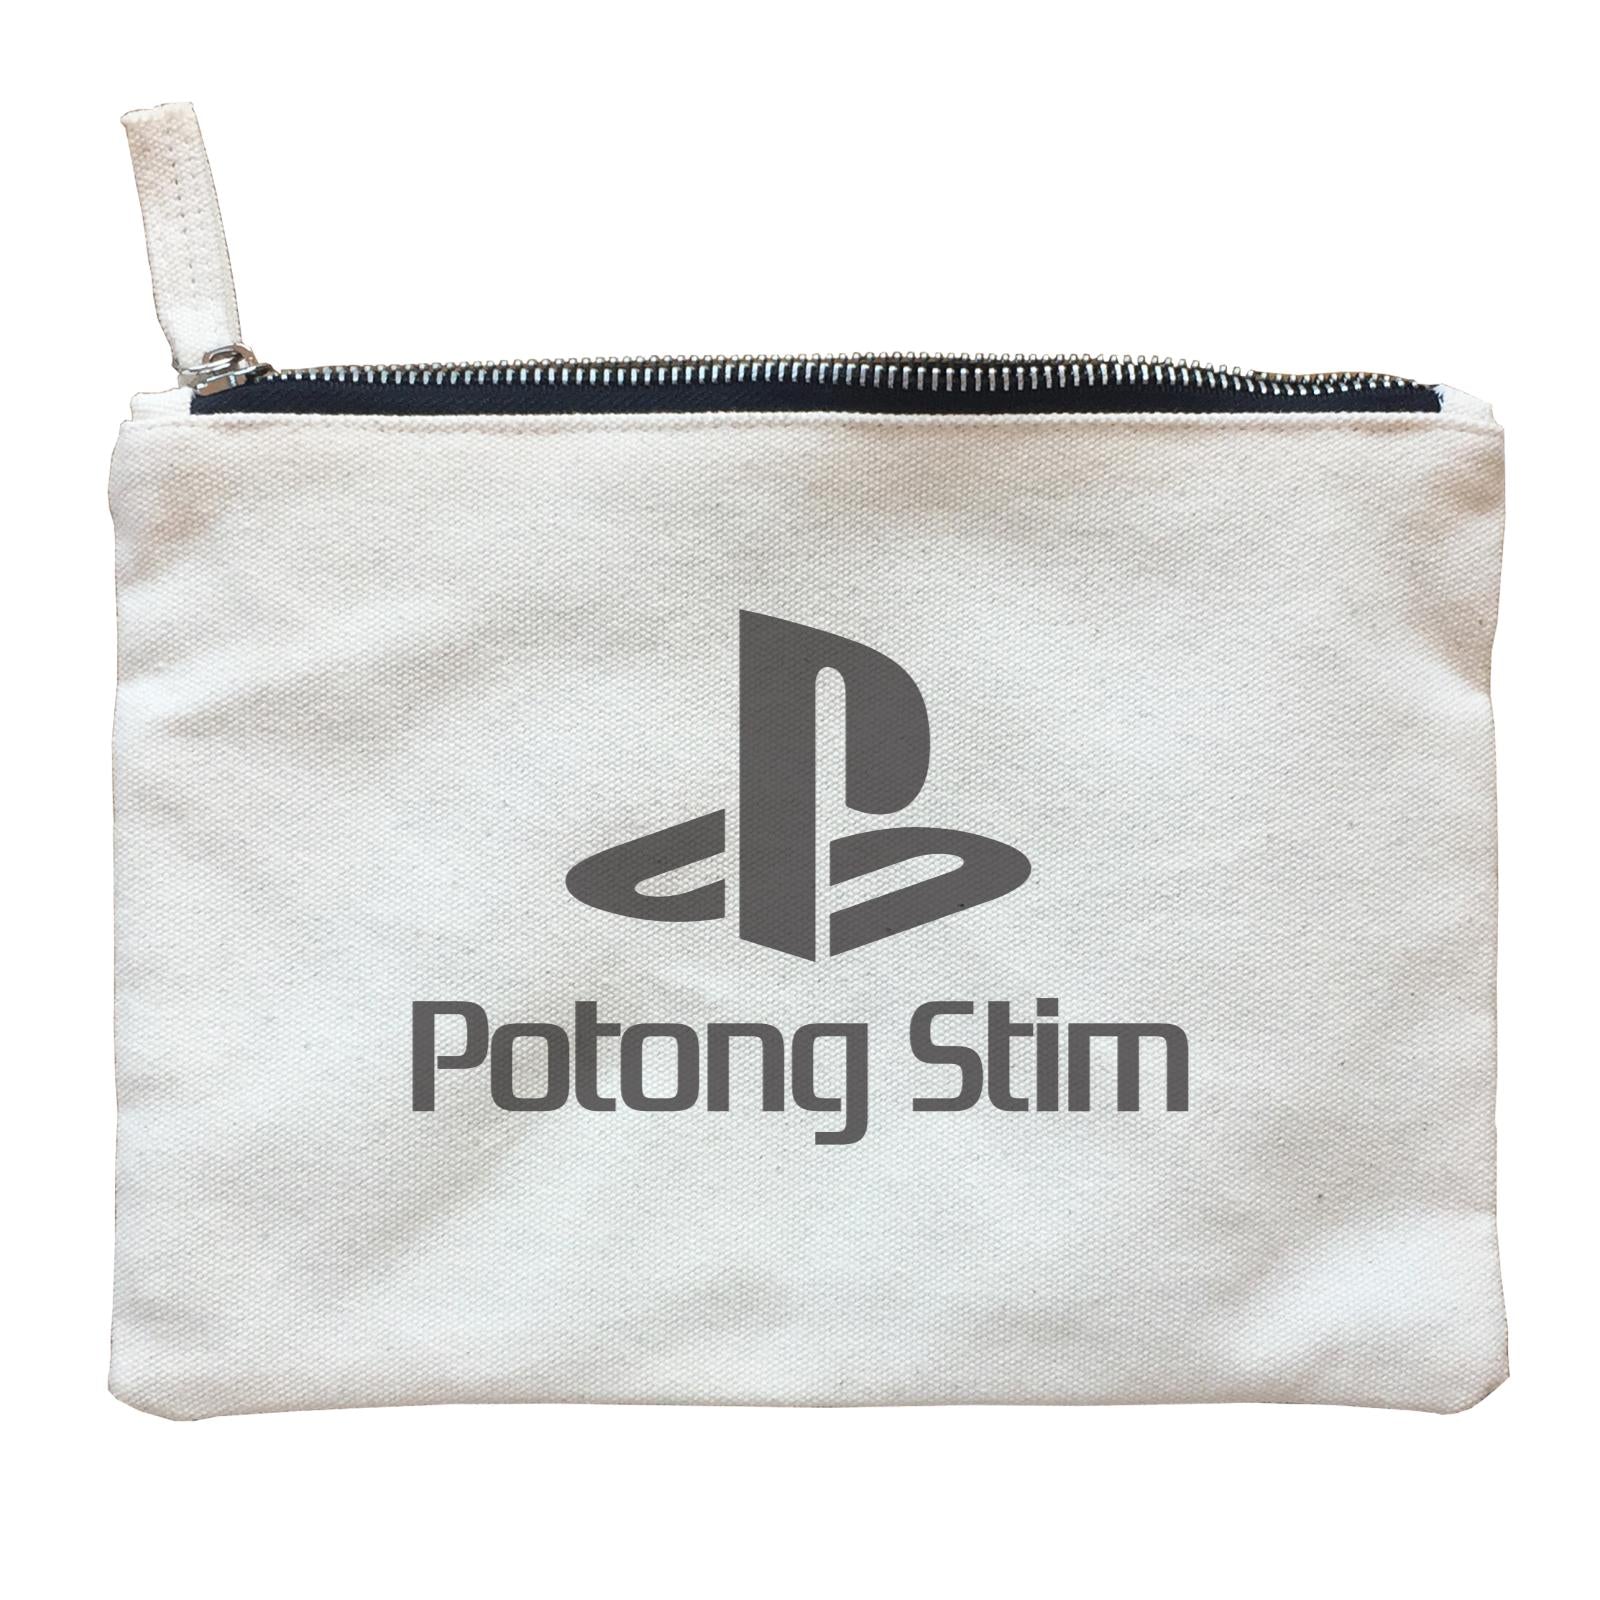 Slang Statement Potong Stim Accessories Zipper Pouch